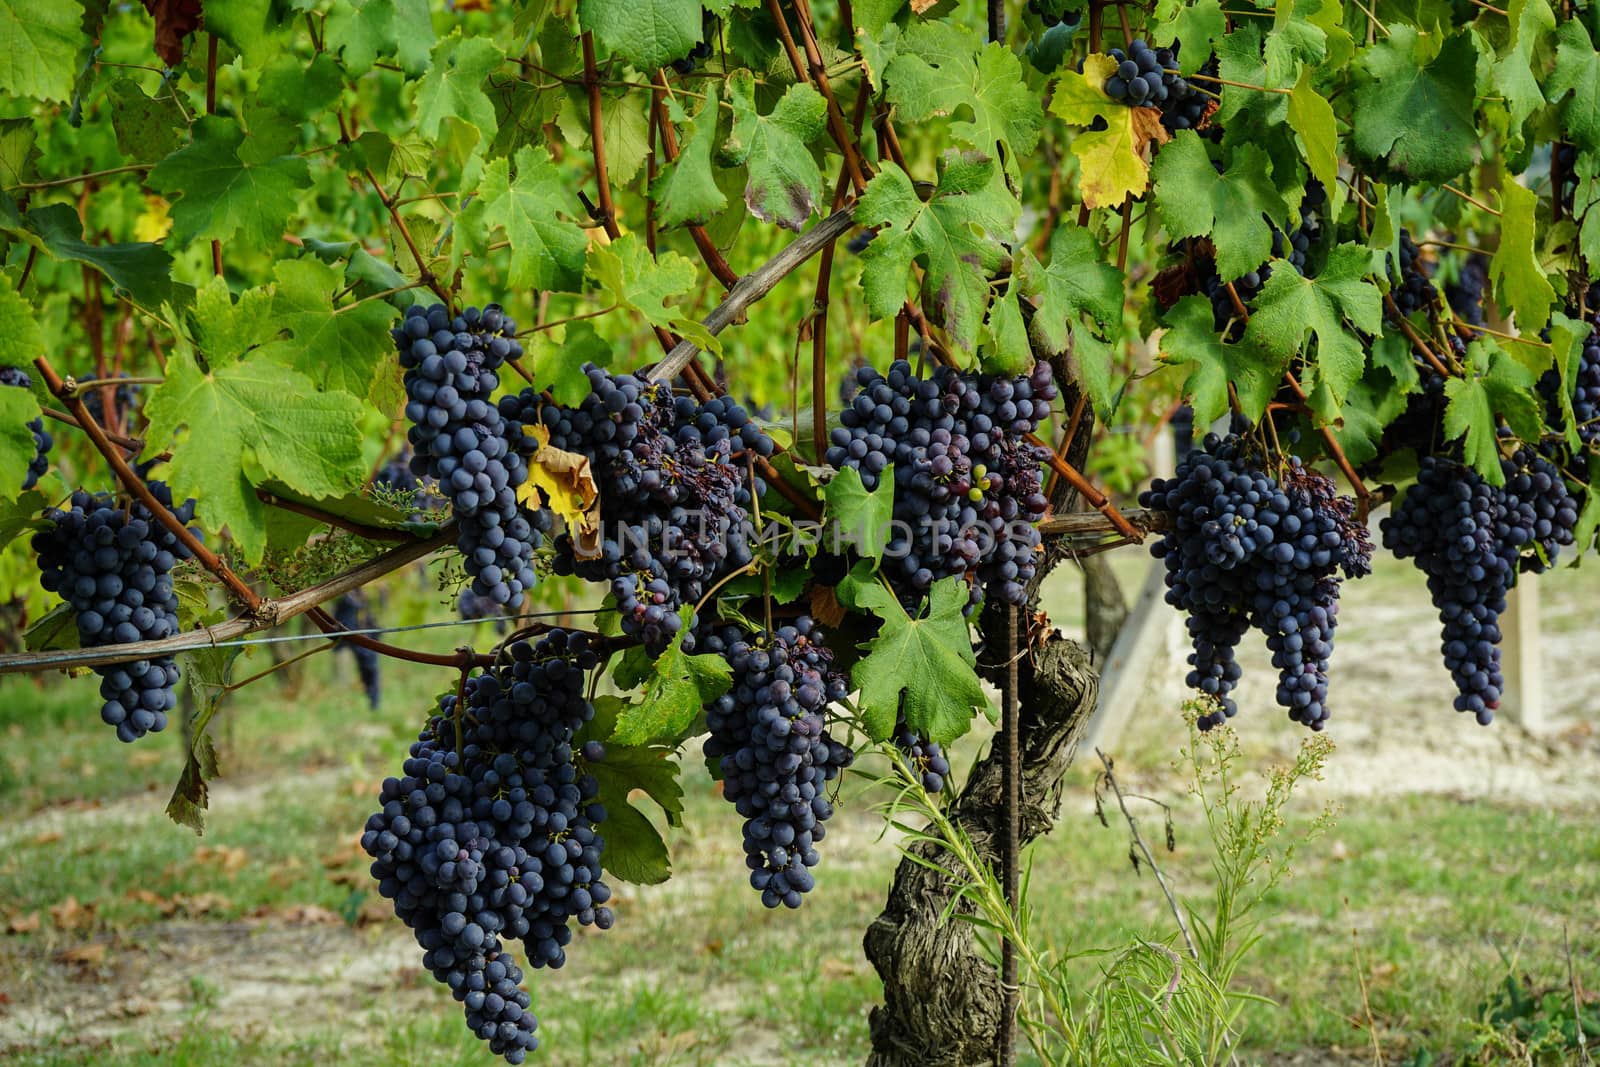 Vineyard on the hills of Barolo, Piedmont - Italy